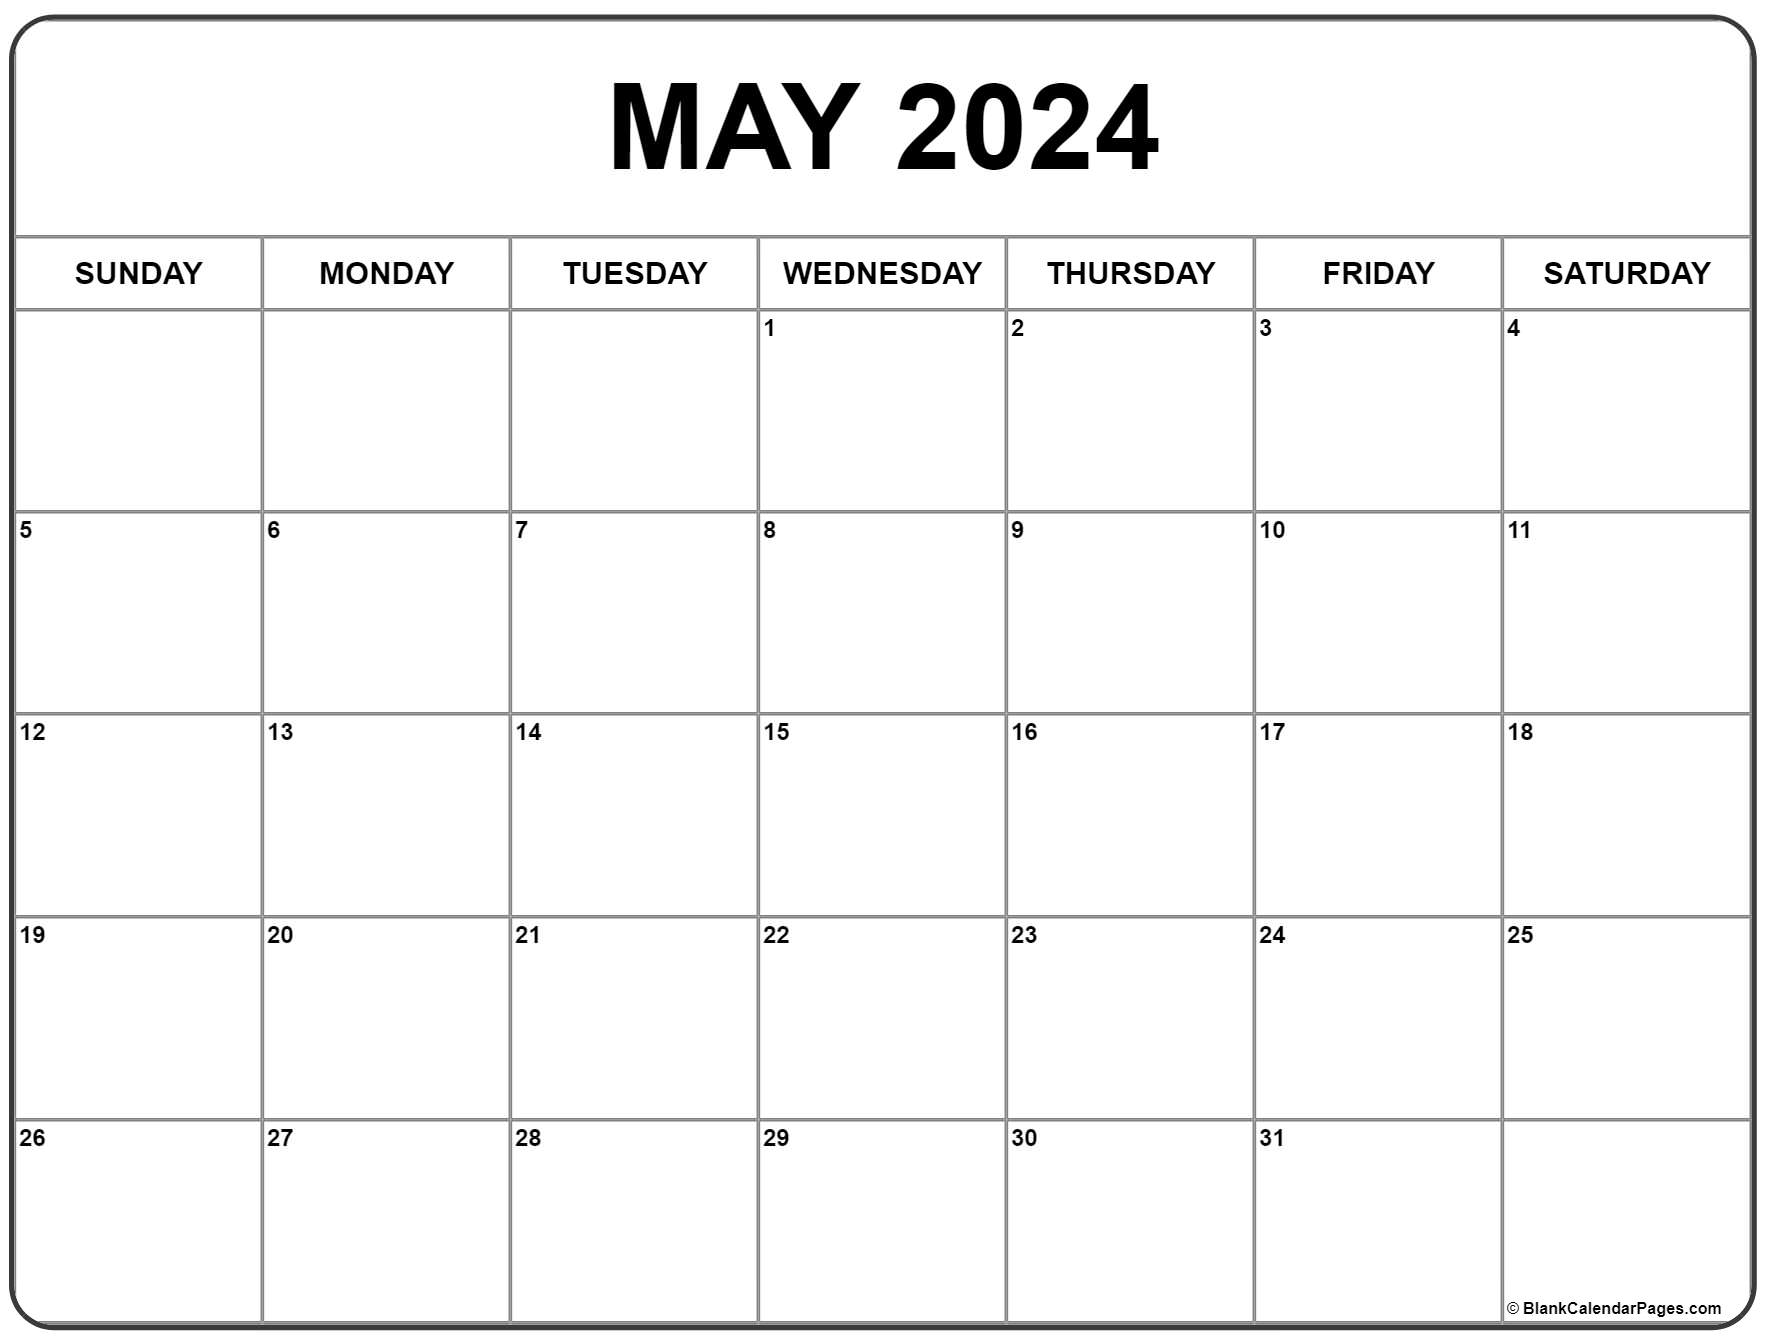 May 2024 Calendar | Free Printable Calendar for Free May Printable Calendar 2024